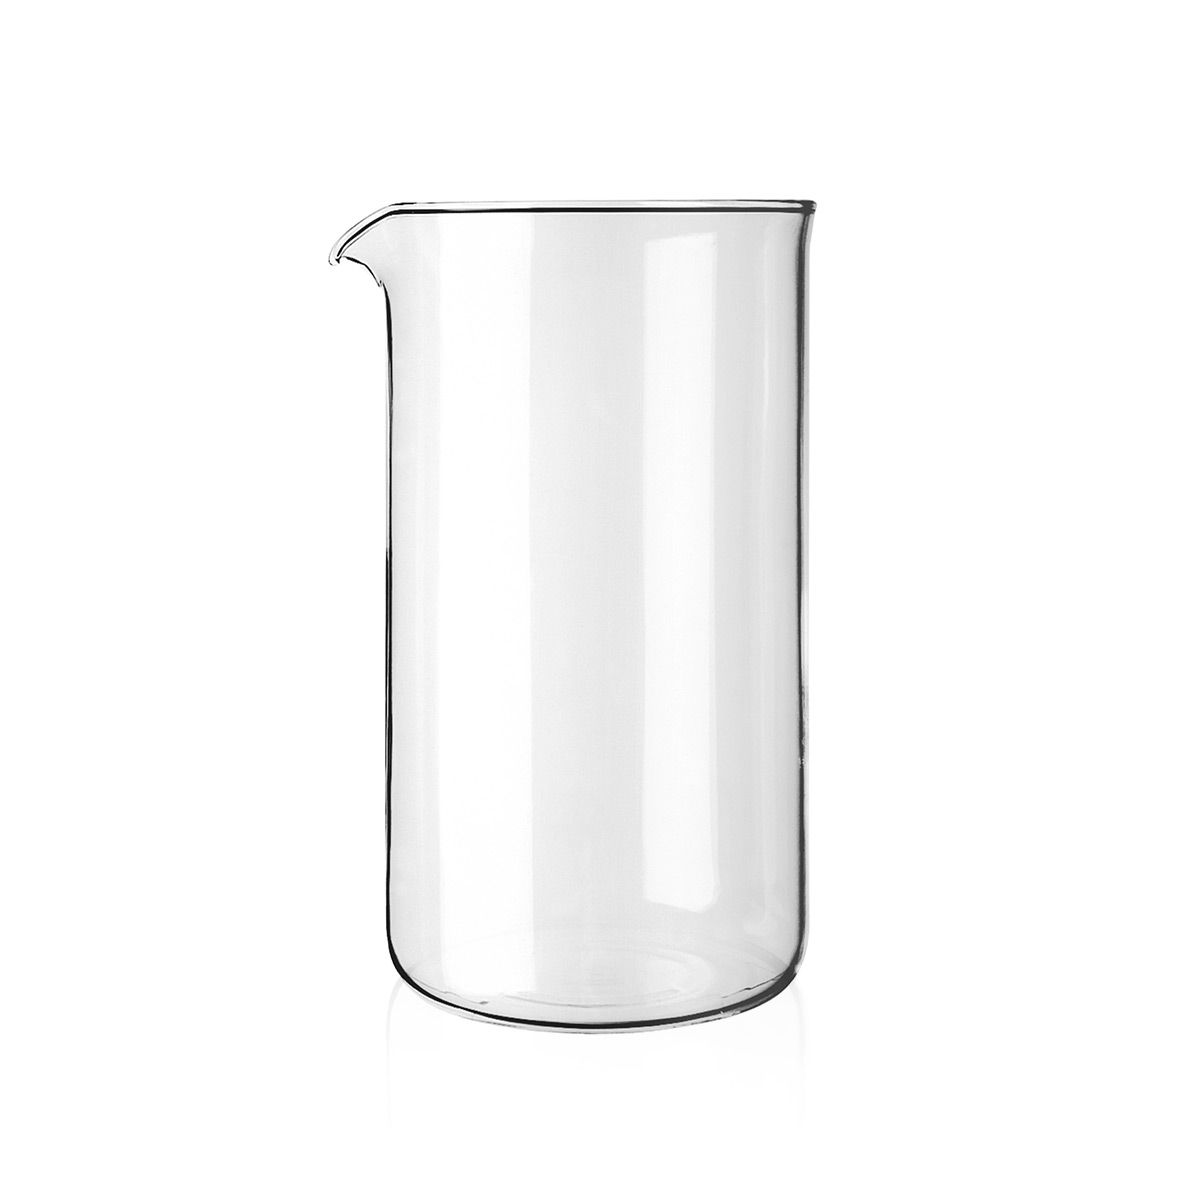 Bodum Replacement 8 cup beaker